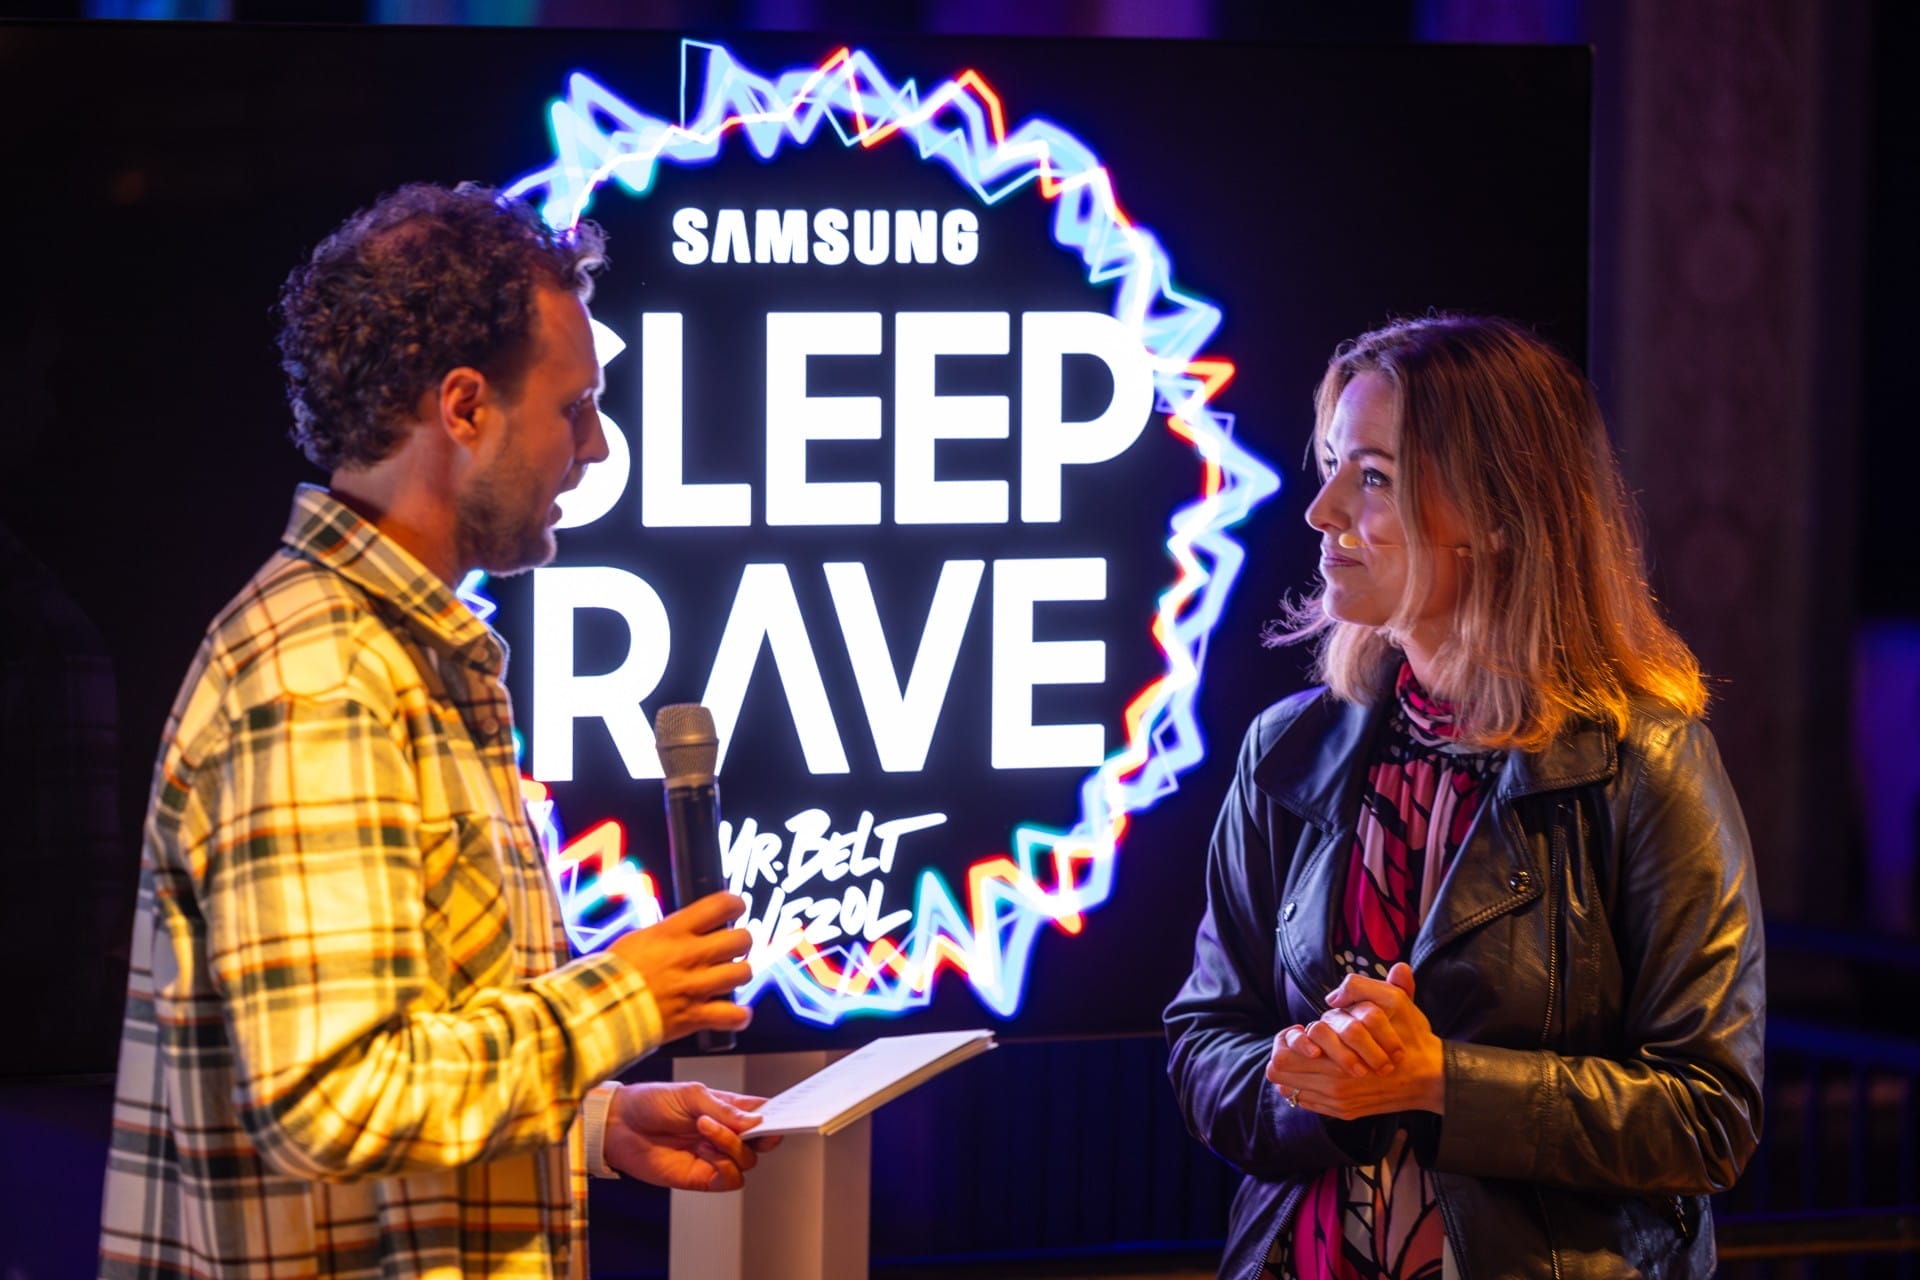 Samsung Sleep Rave